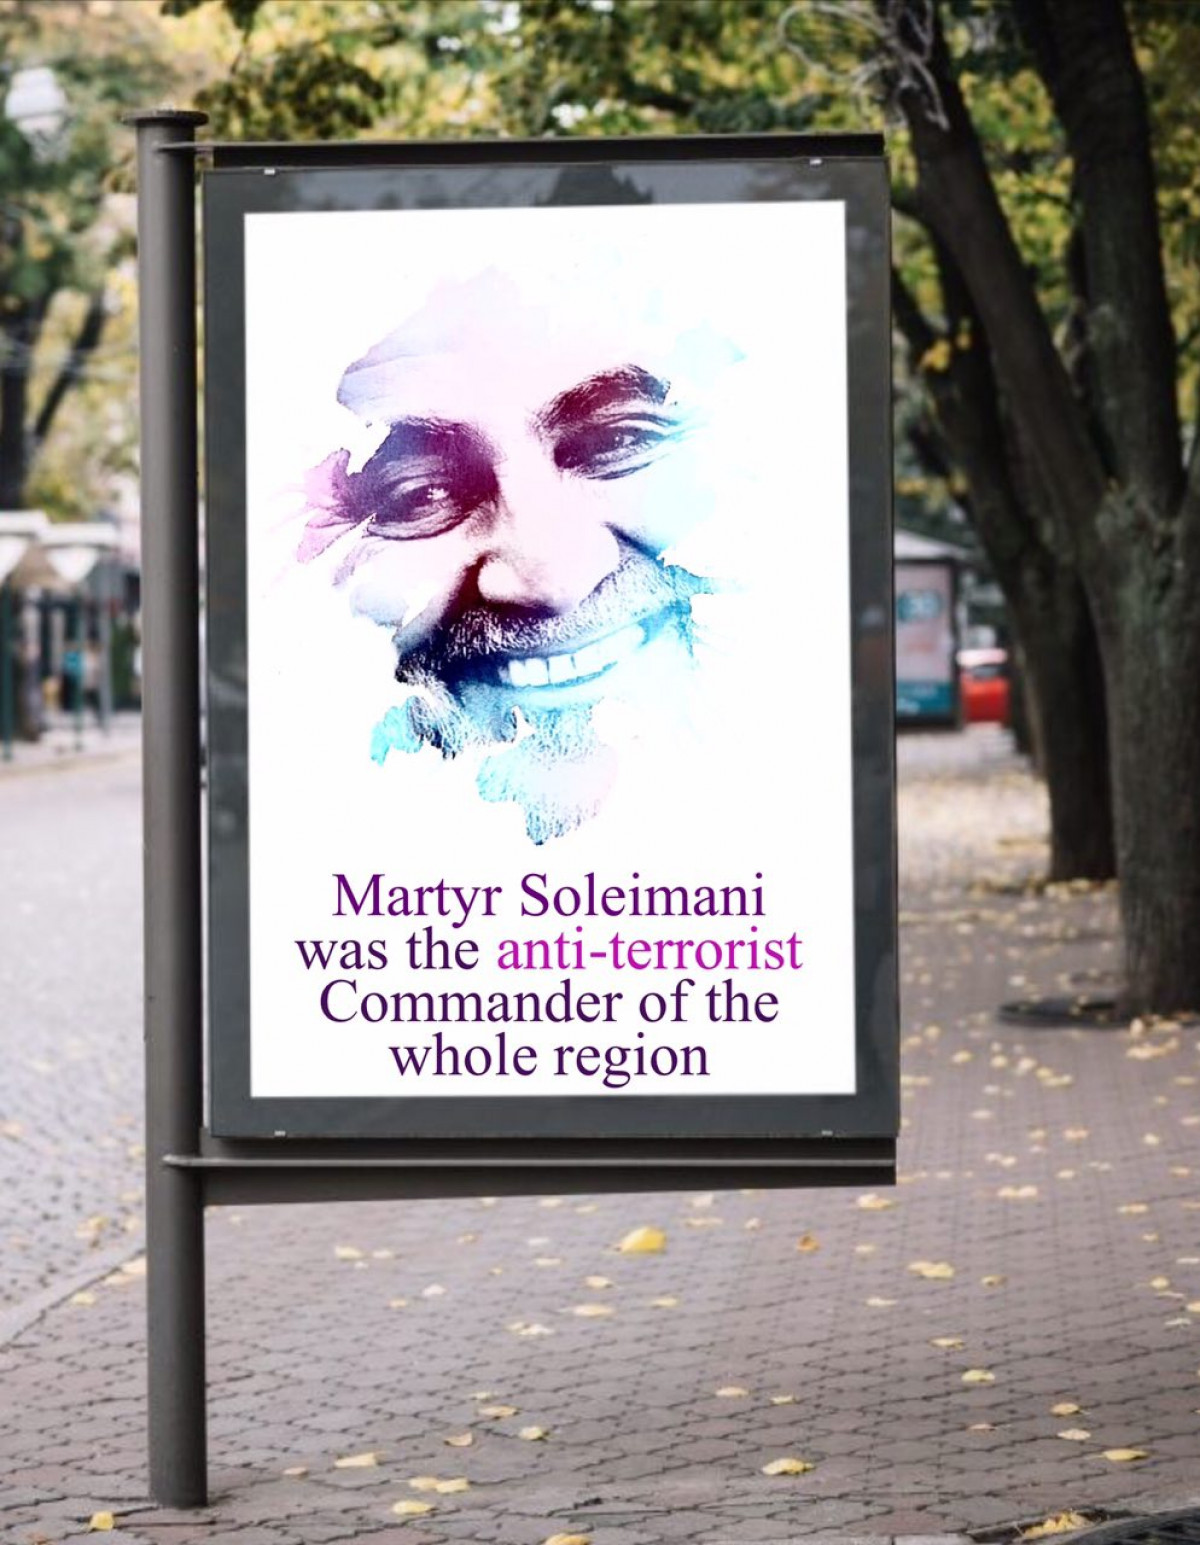 Martyr Soleimani was the anti-terrorist Commander of the whole region